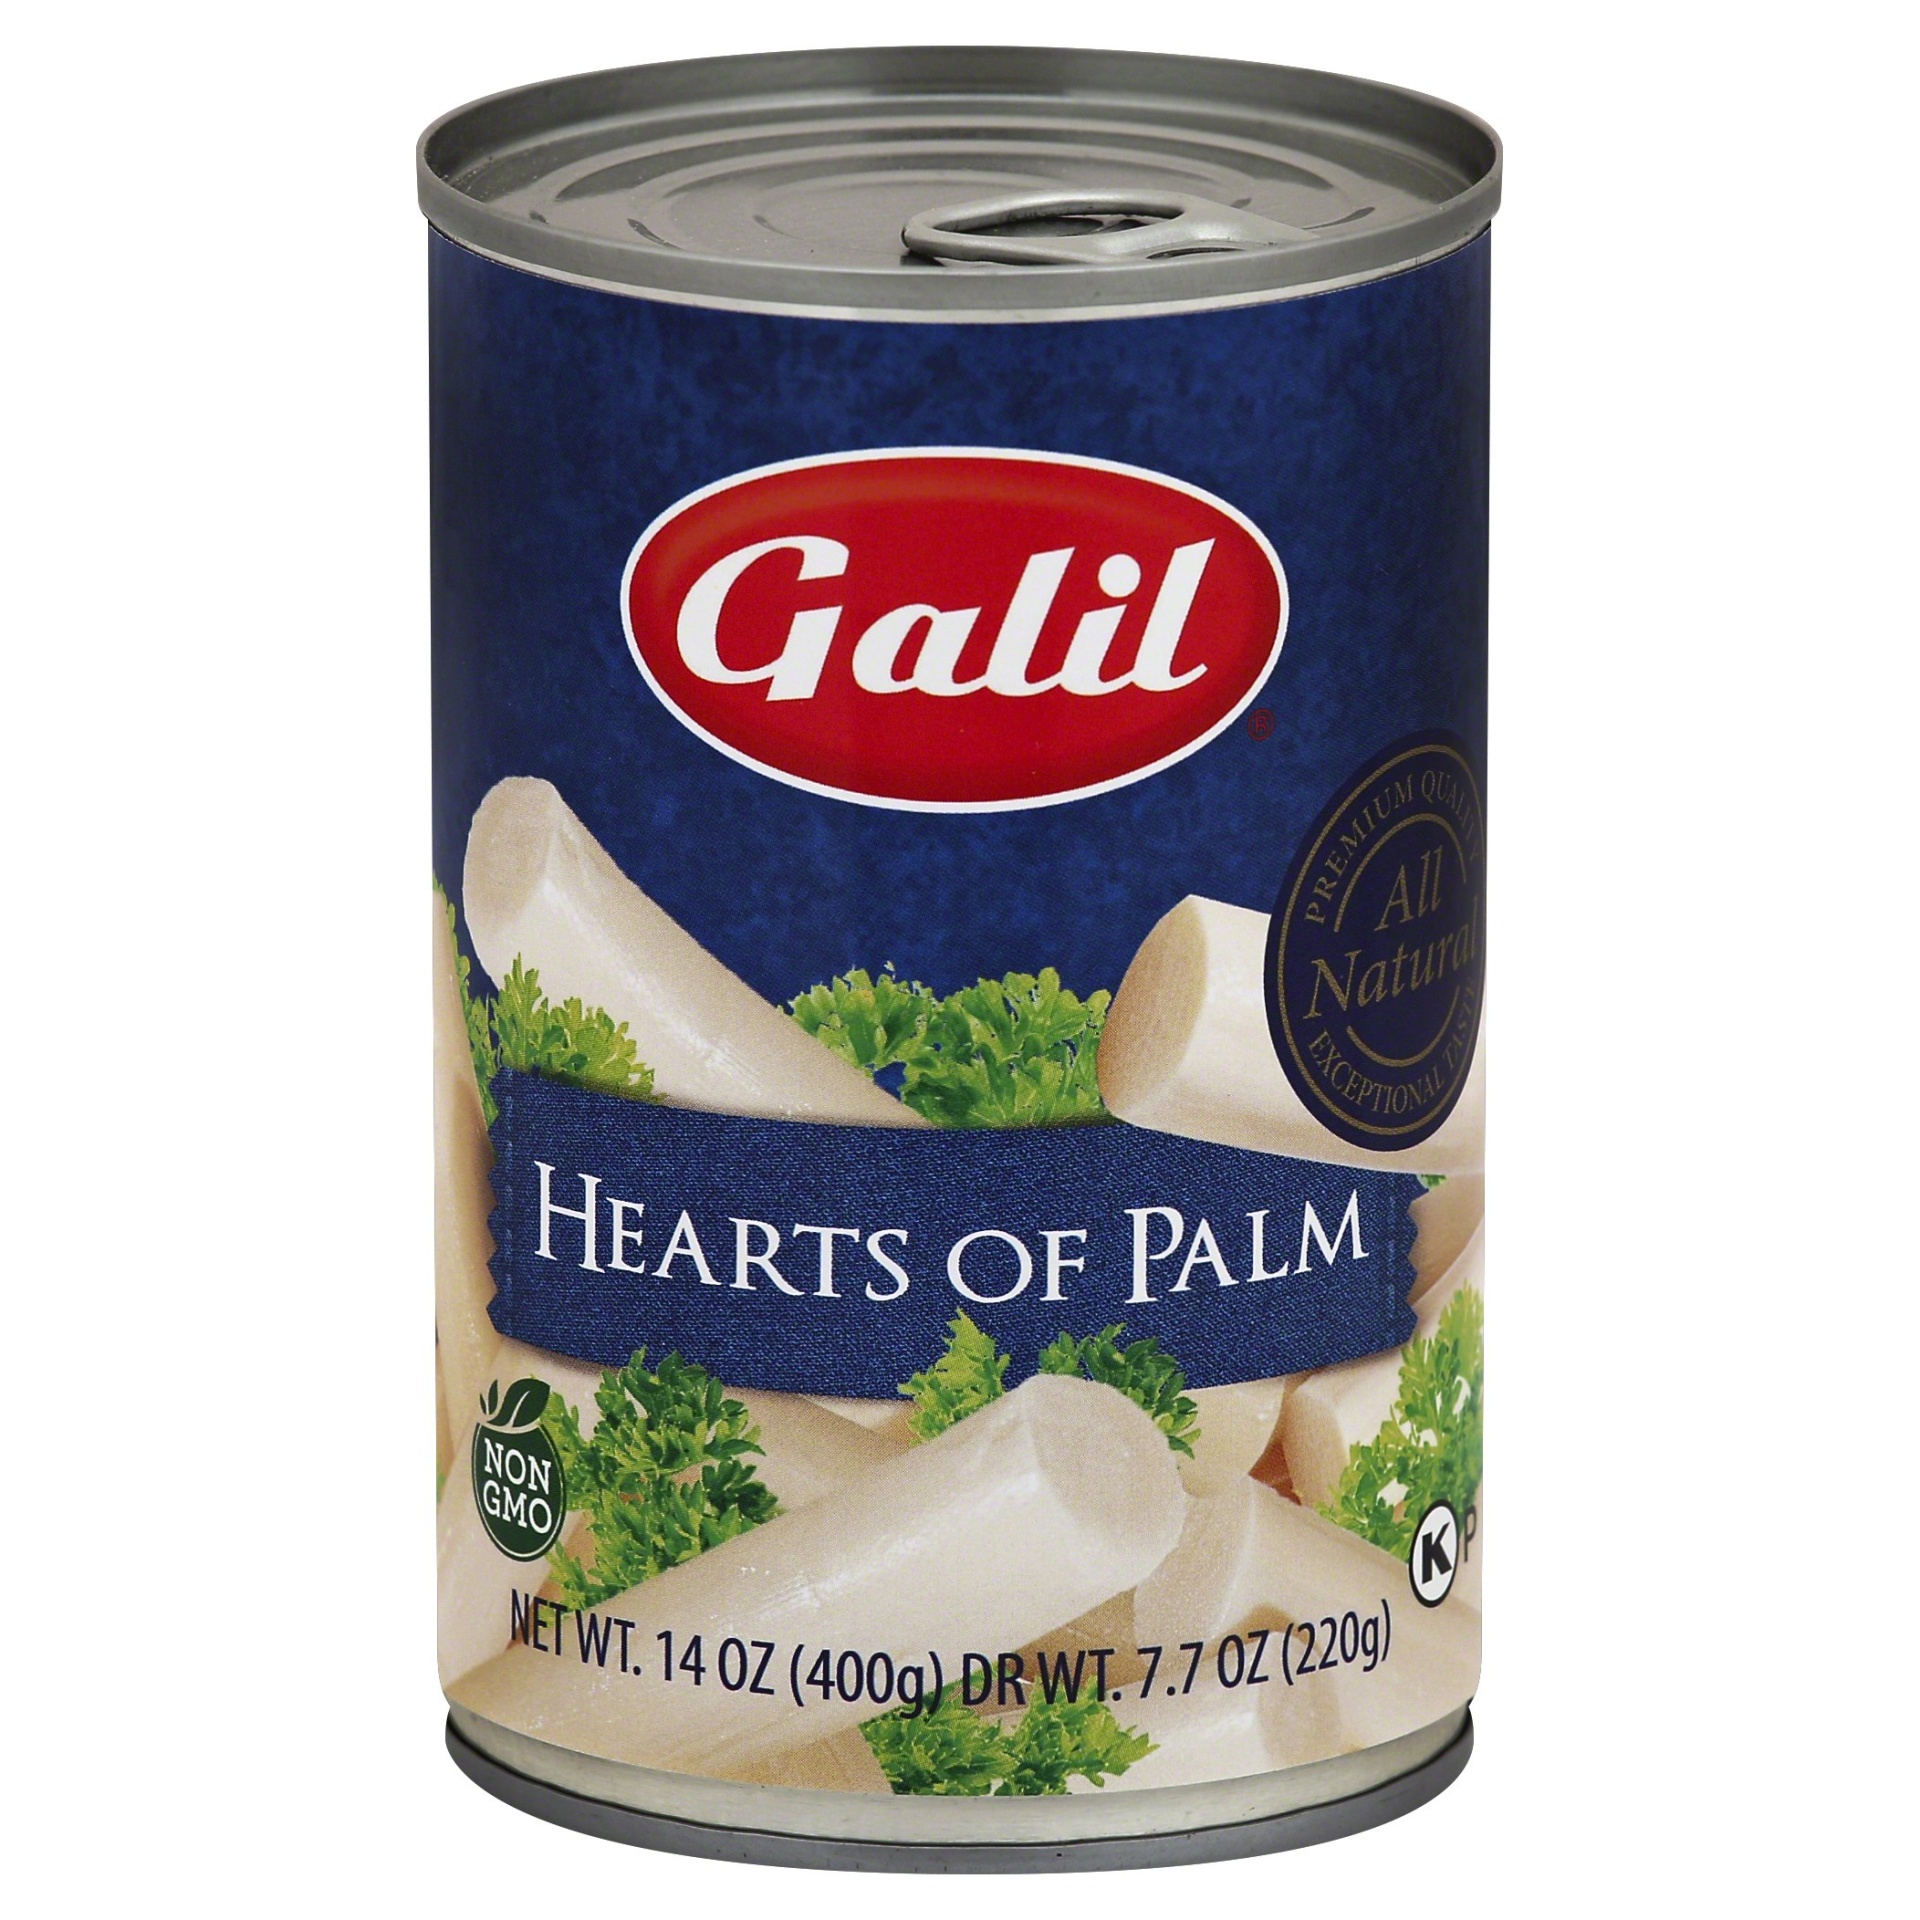 slide 1 of 2, Galil Hearts of Palm 14 oz, 14 oz